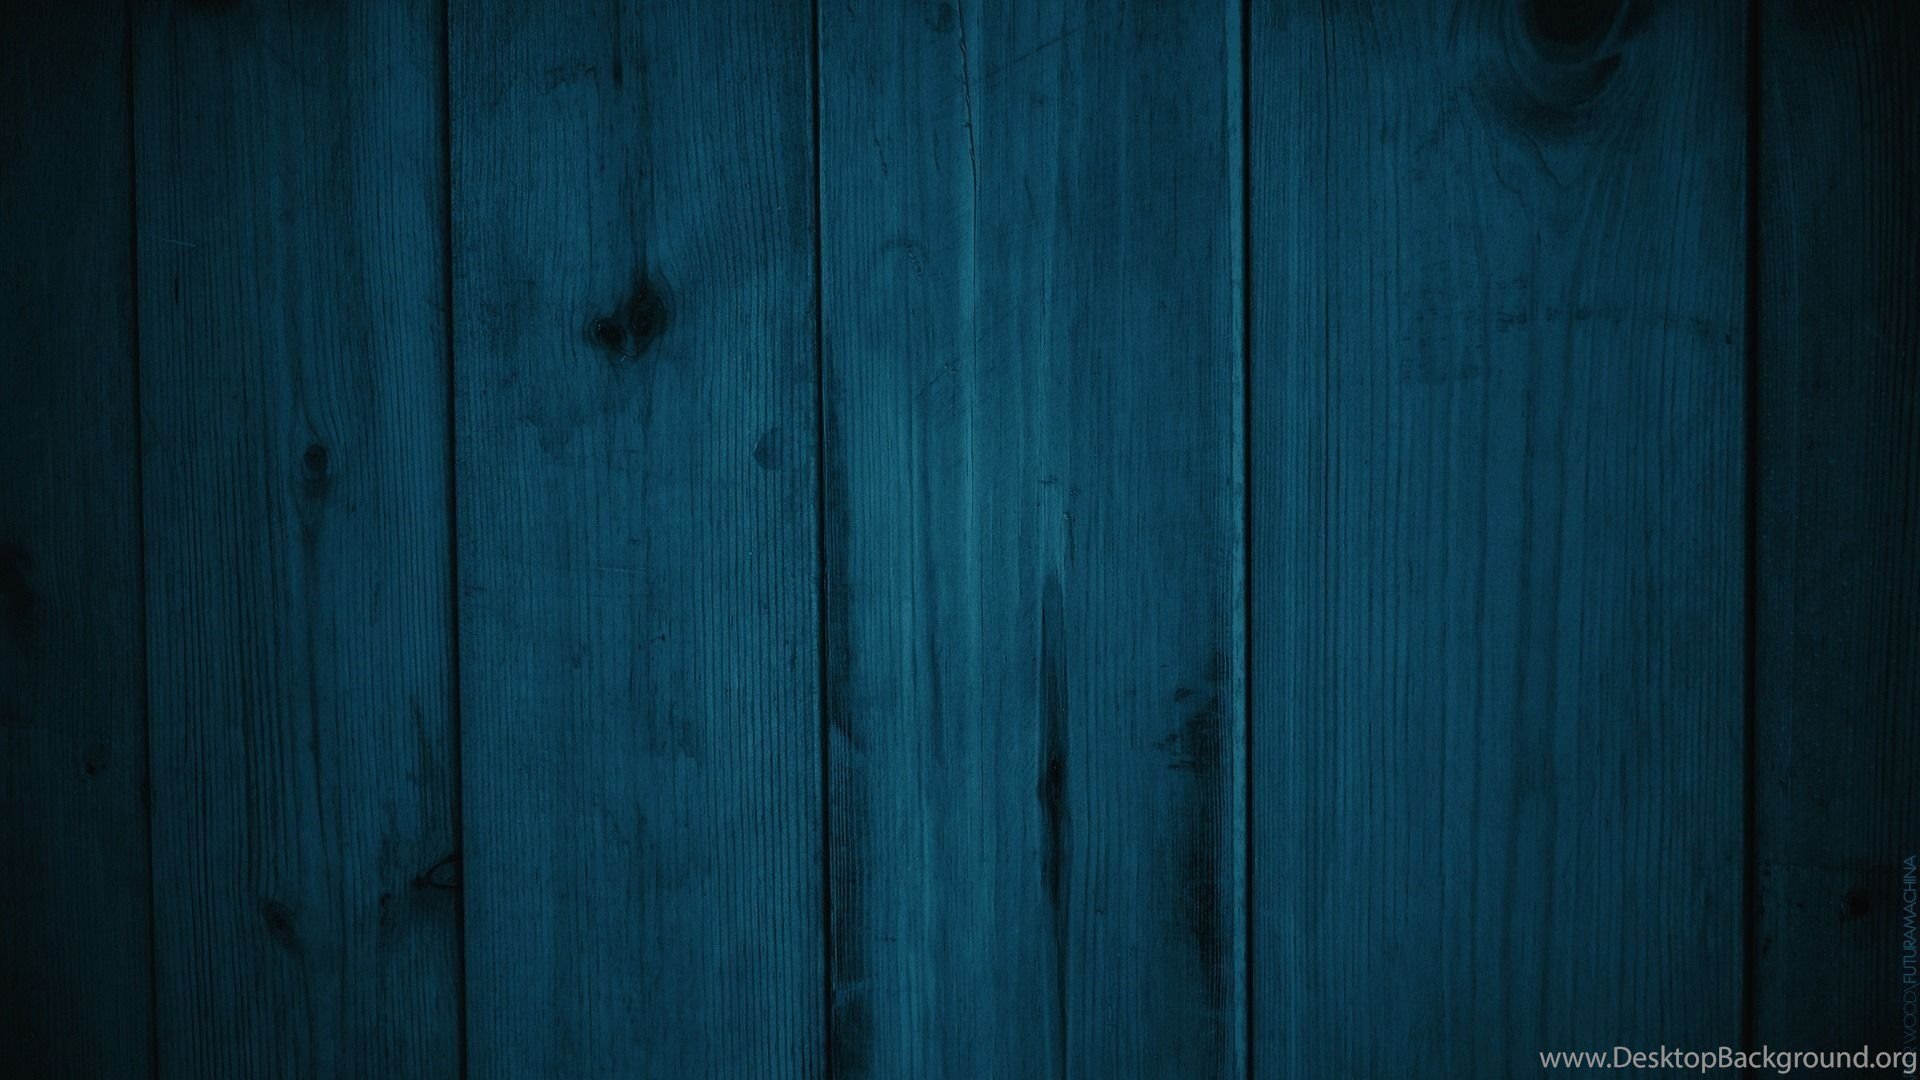 Blue and green wood 1920 X 1080 Wallpaper Desktop Background